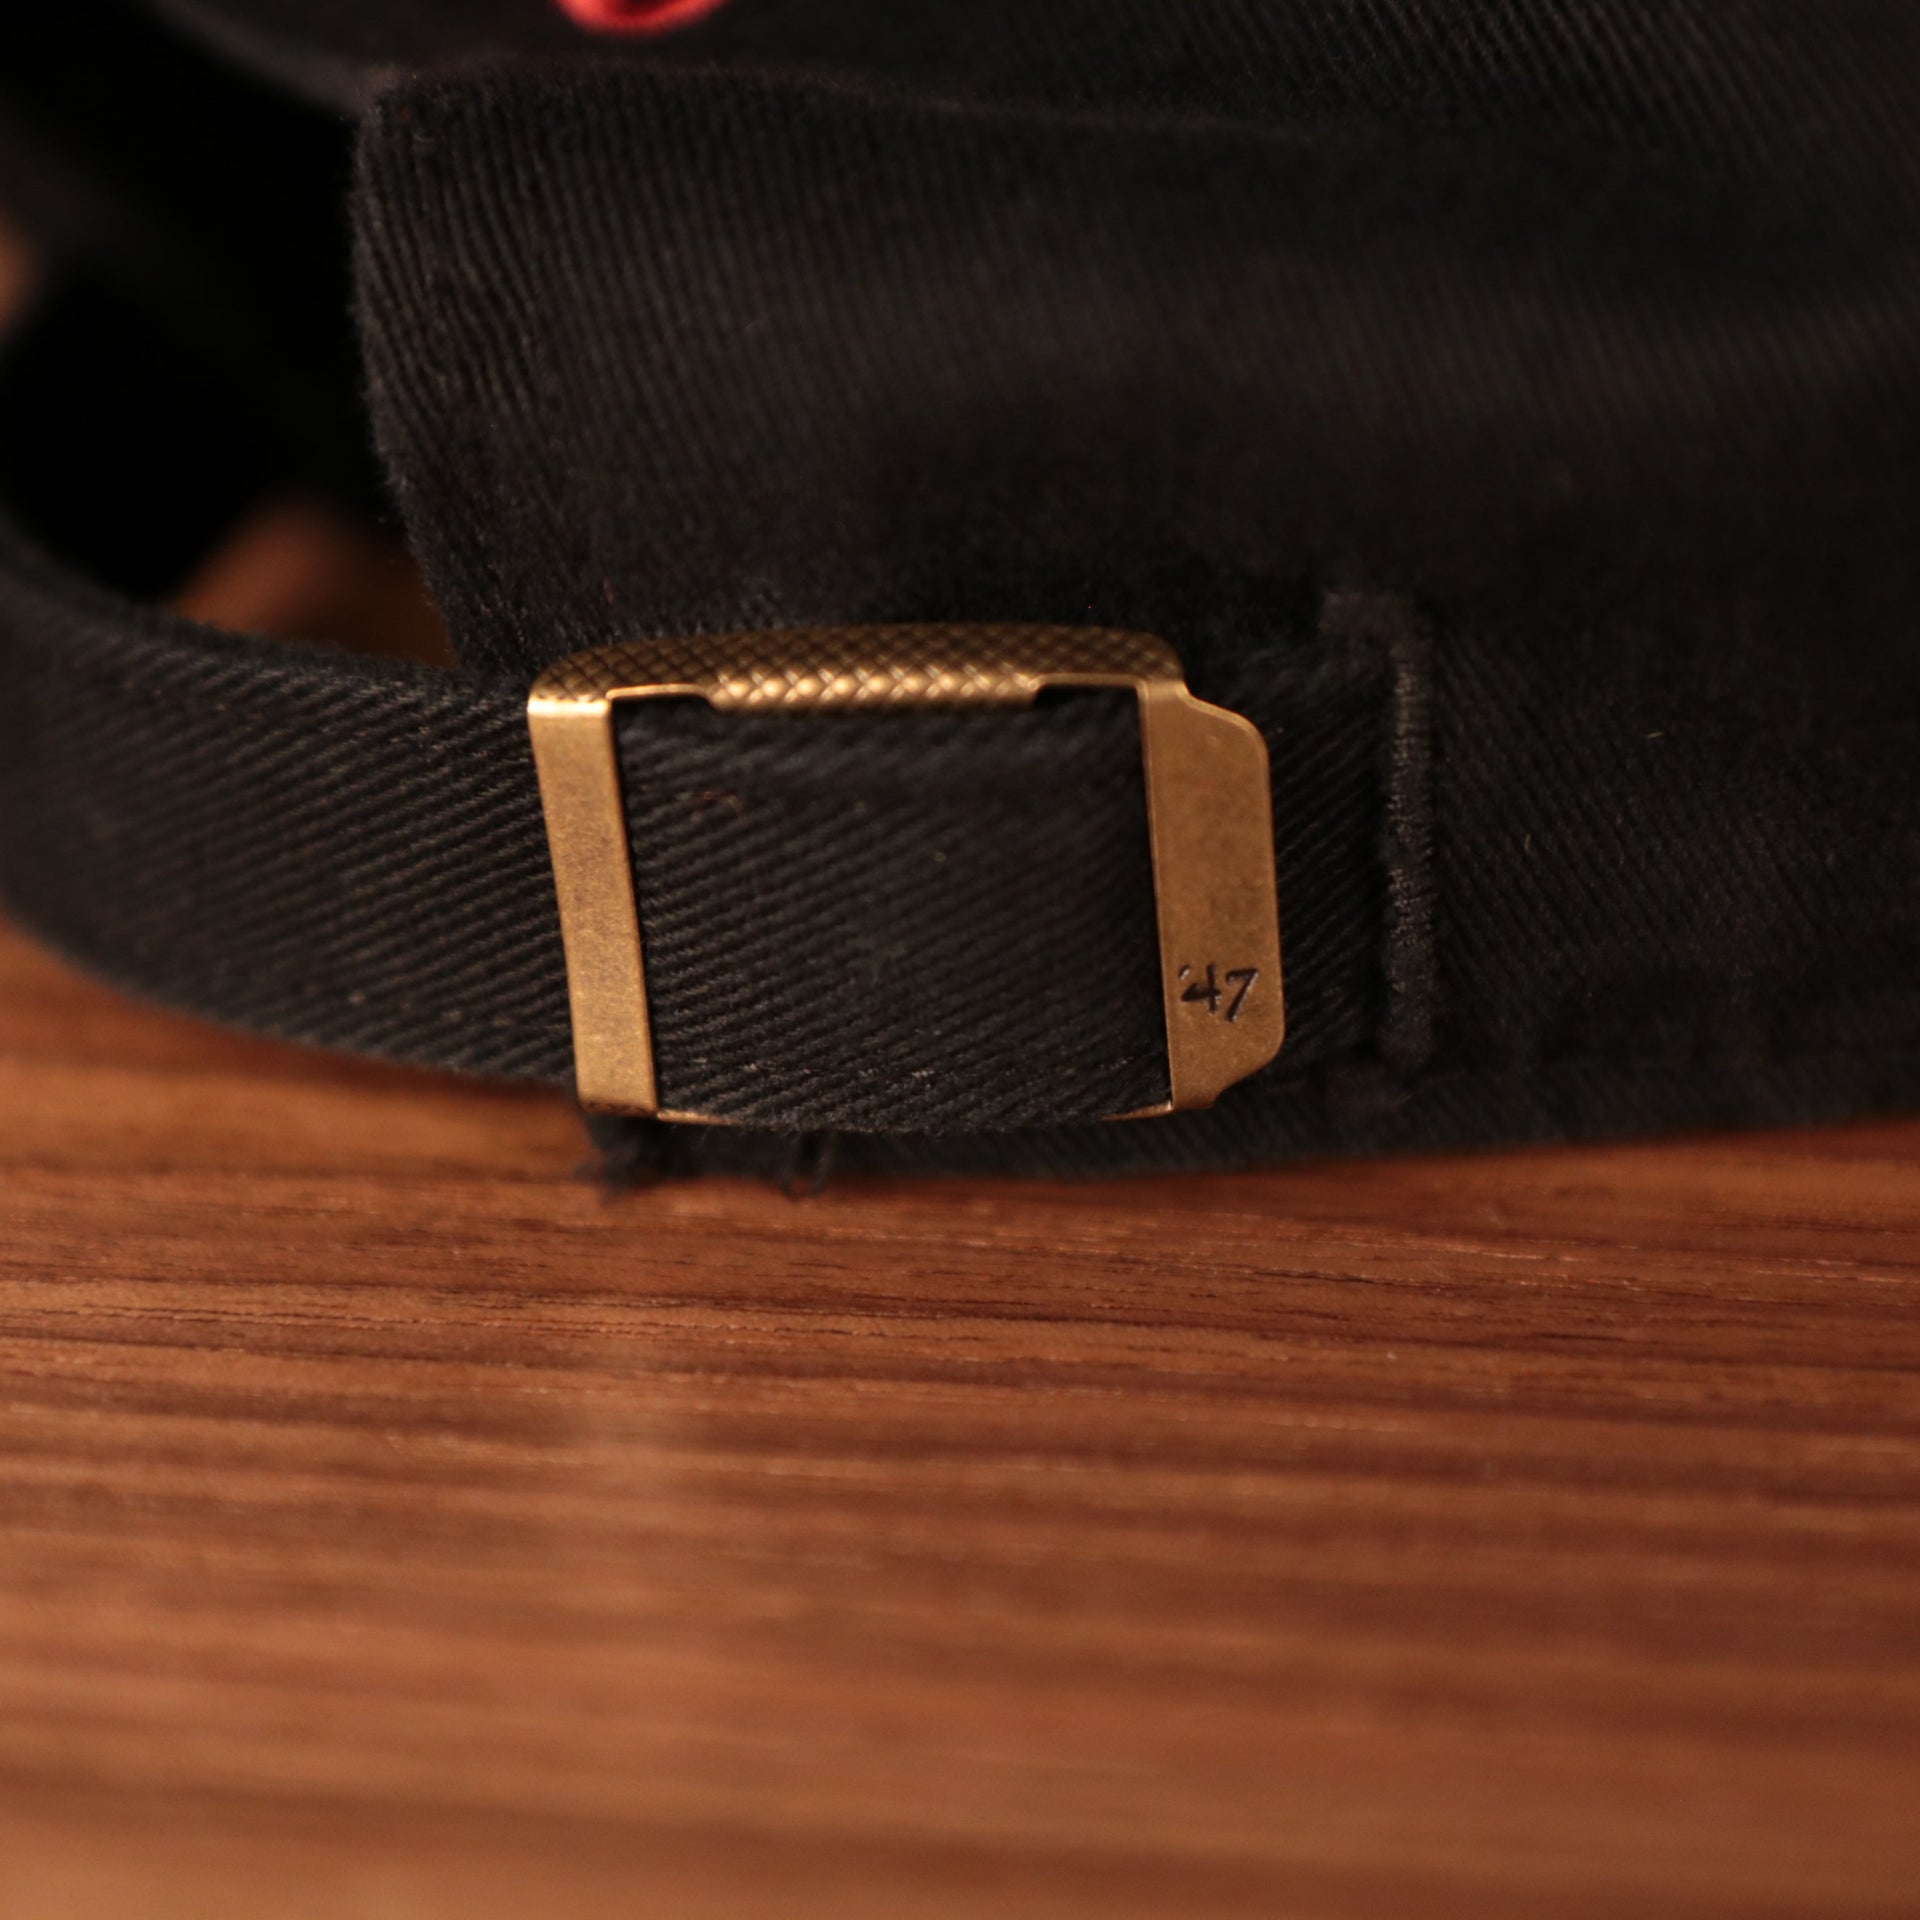 adjustable strap on the back of the Rutgers University Throwback Black Adjustable Dad Hat